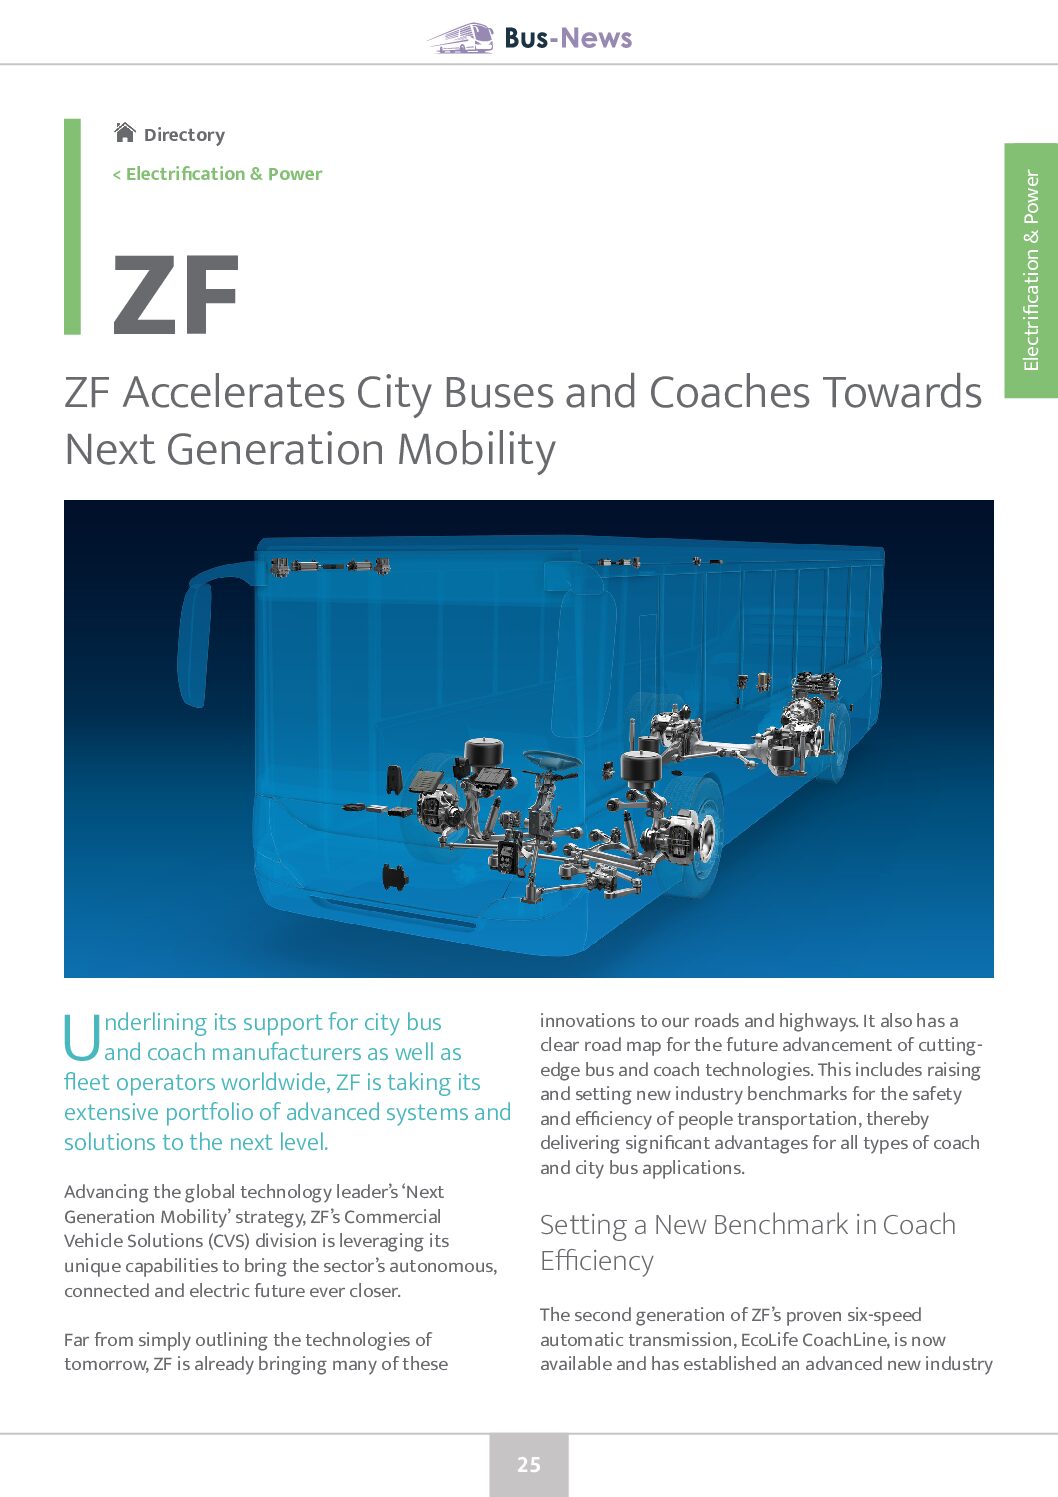 ZF Accelerates Towards Next Generation Mobility